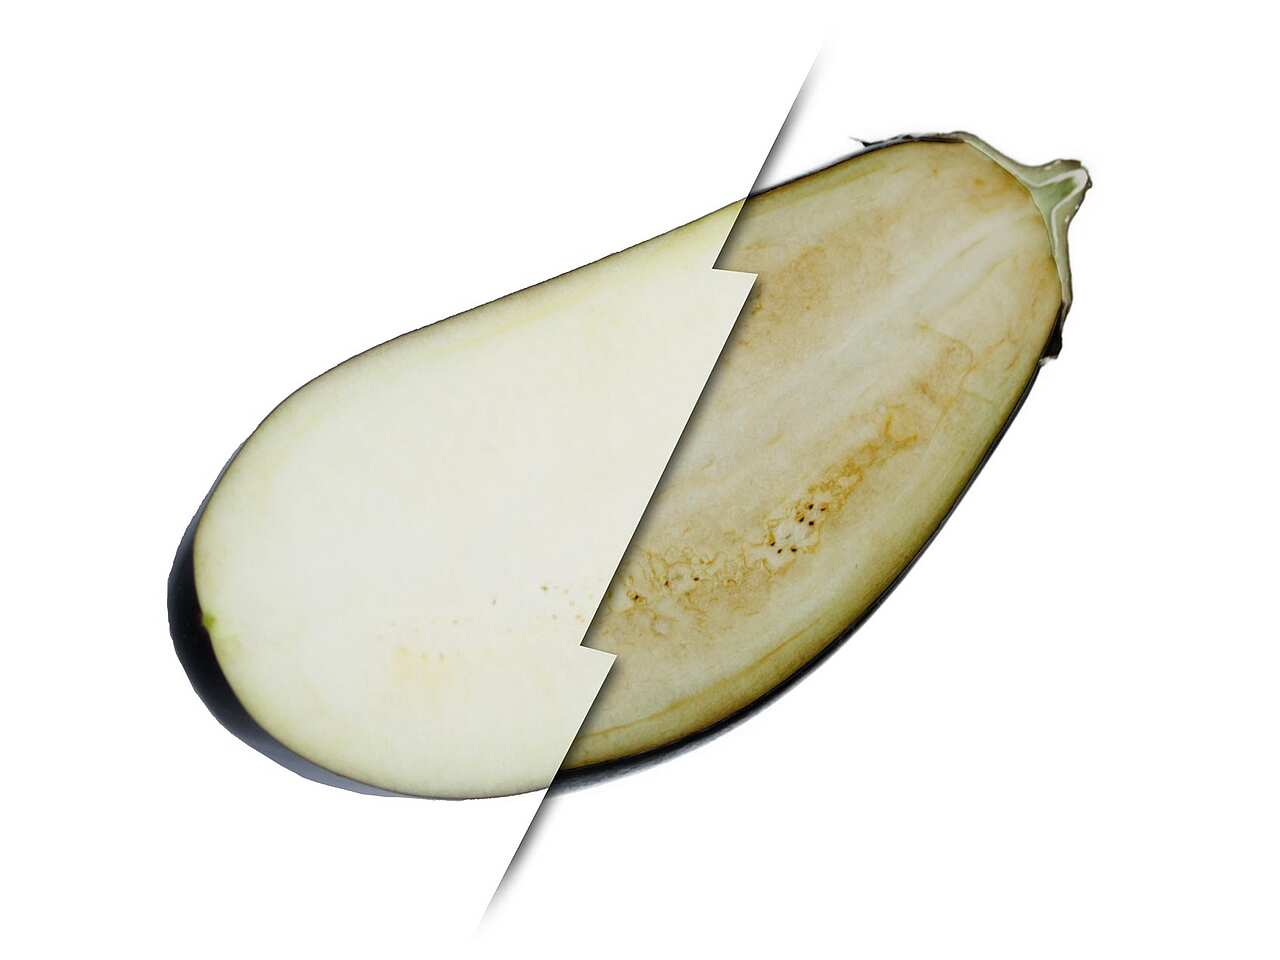 Fresh-Cut Eggplant treated with Food freshly vs. untreated